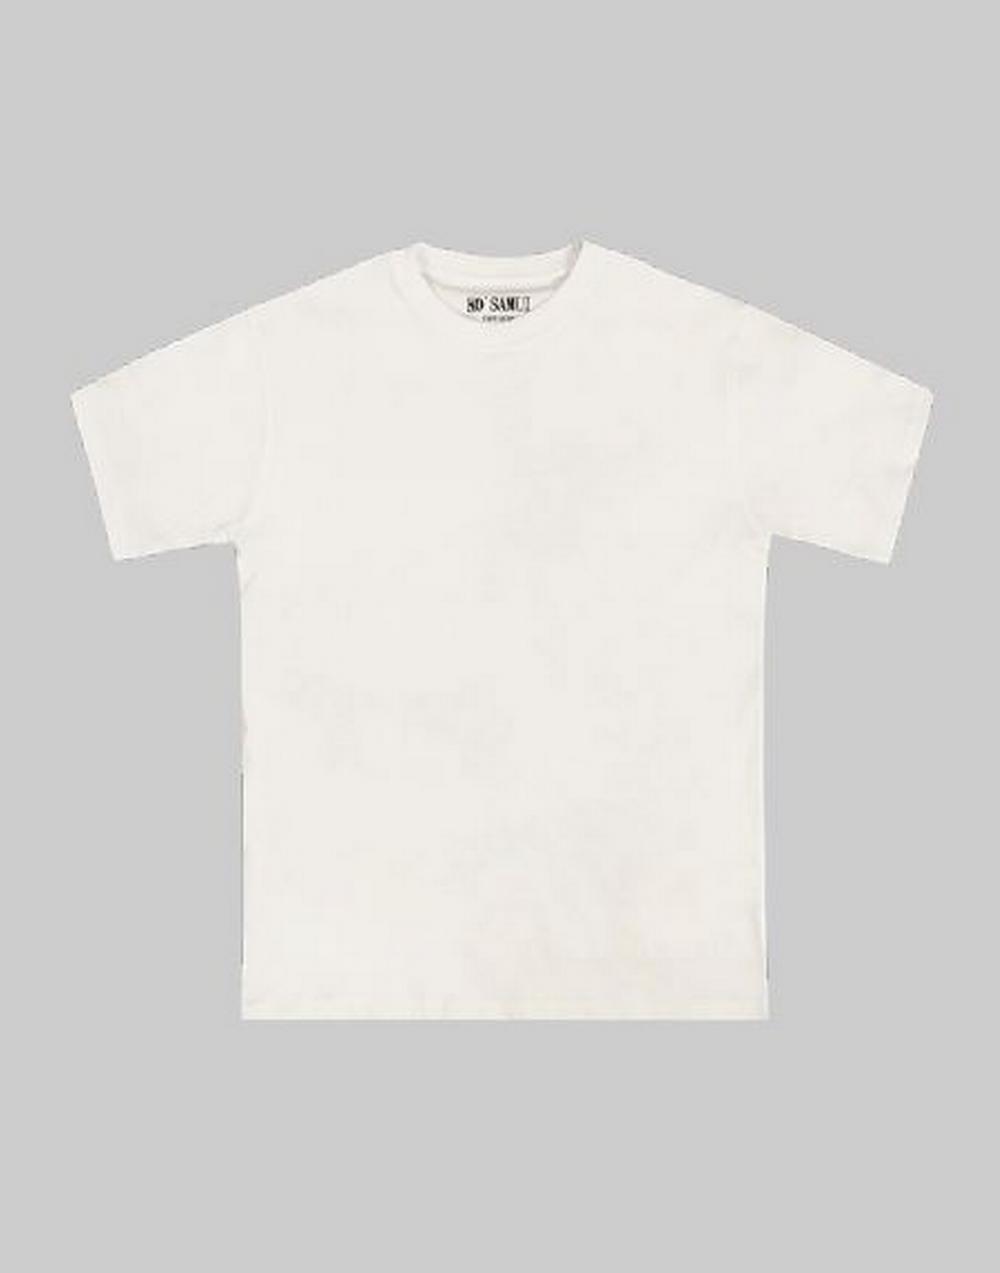 Ko Samui - T-shirt over bianca - MTPBASIC F22